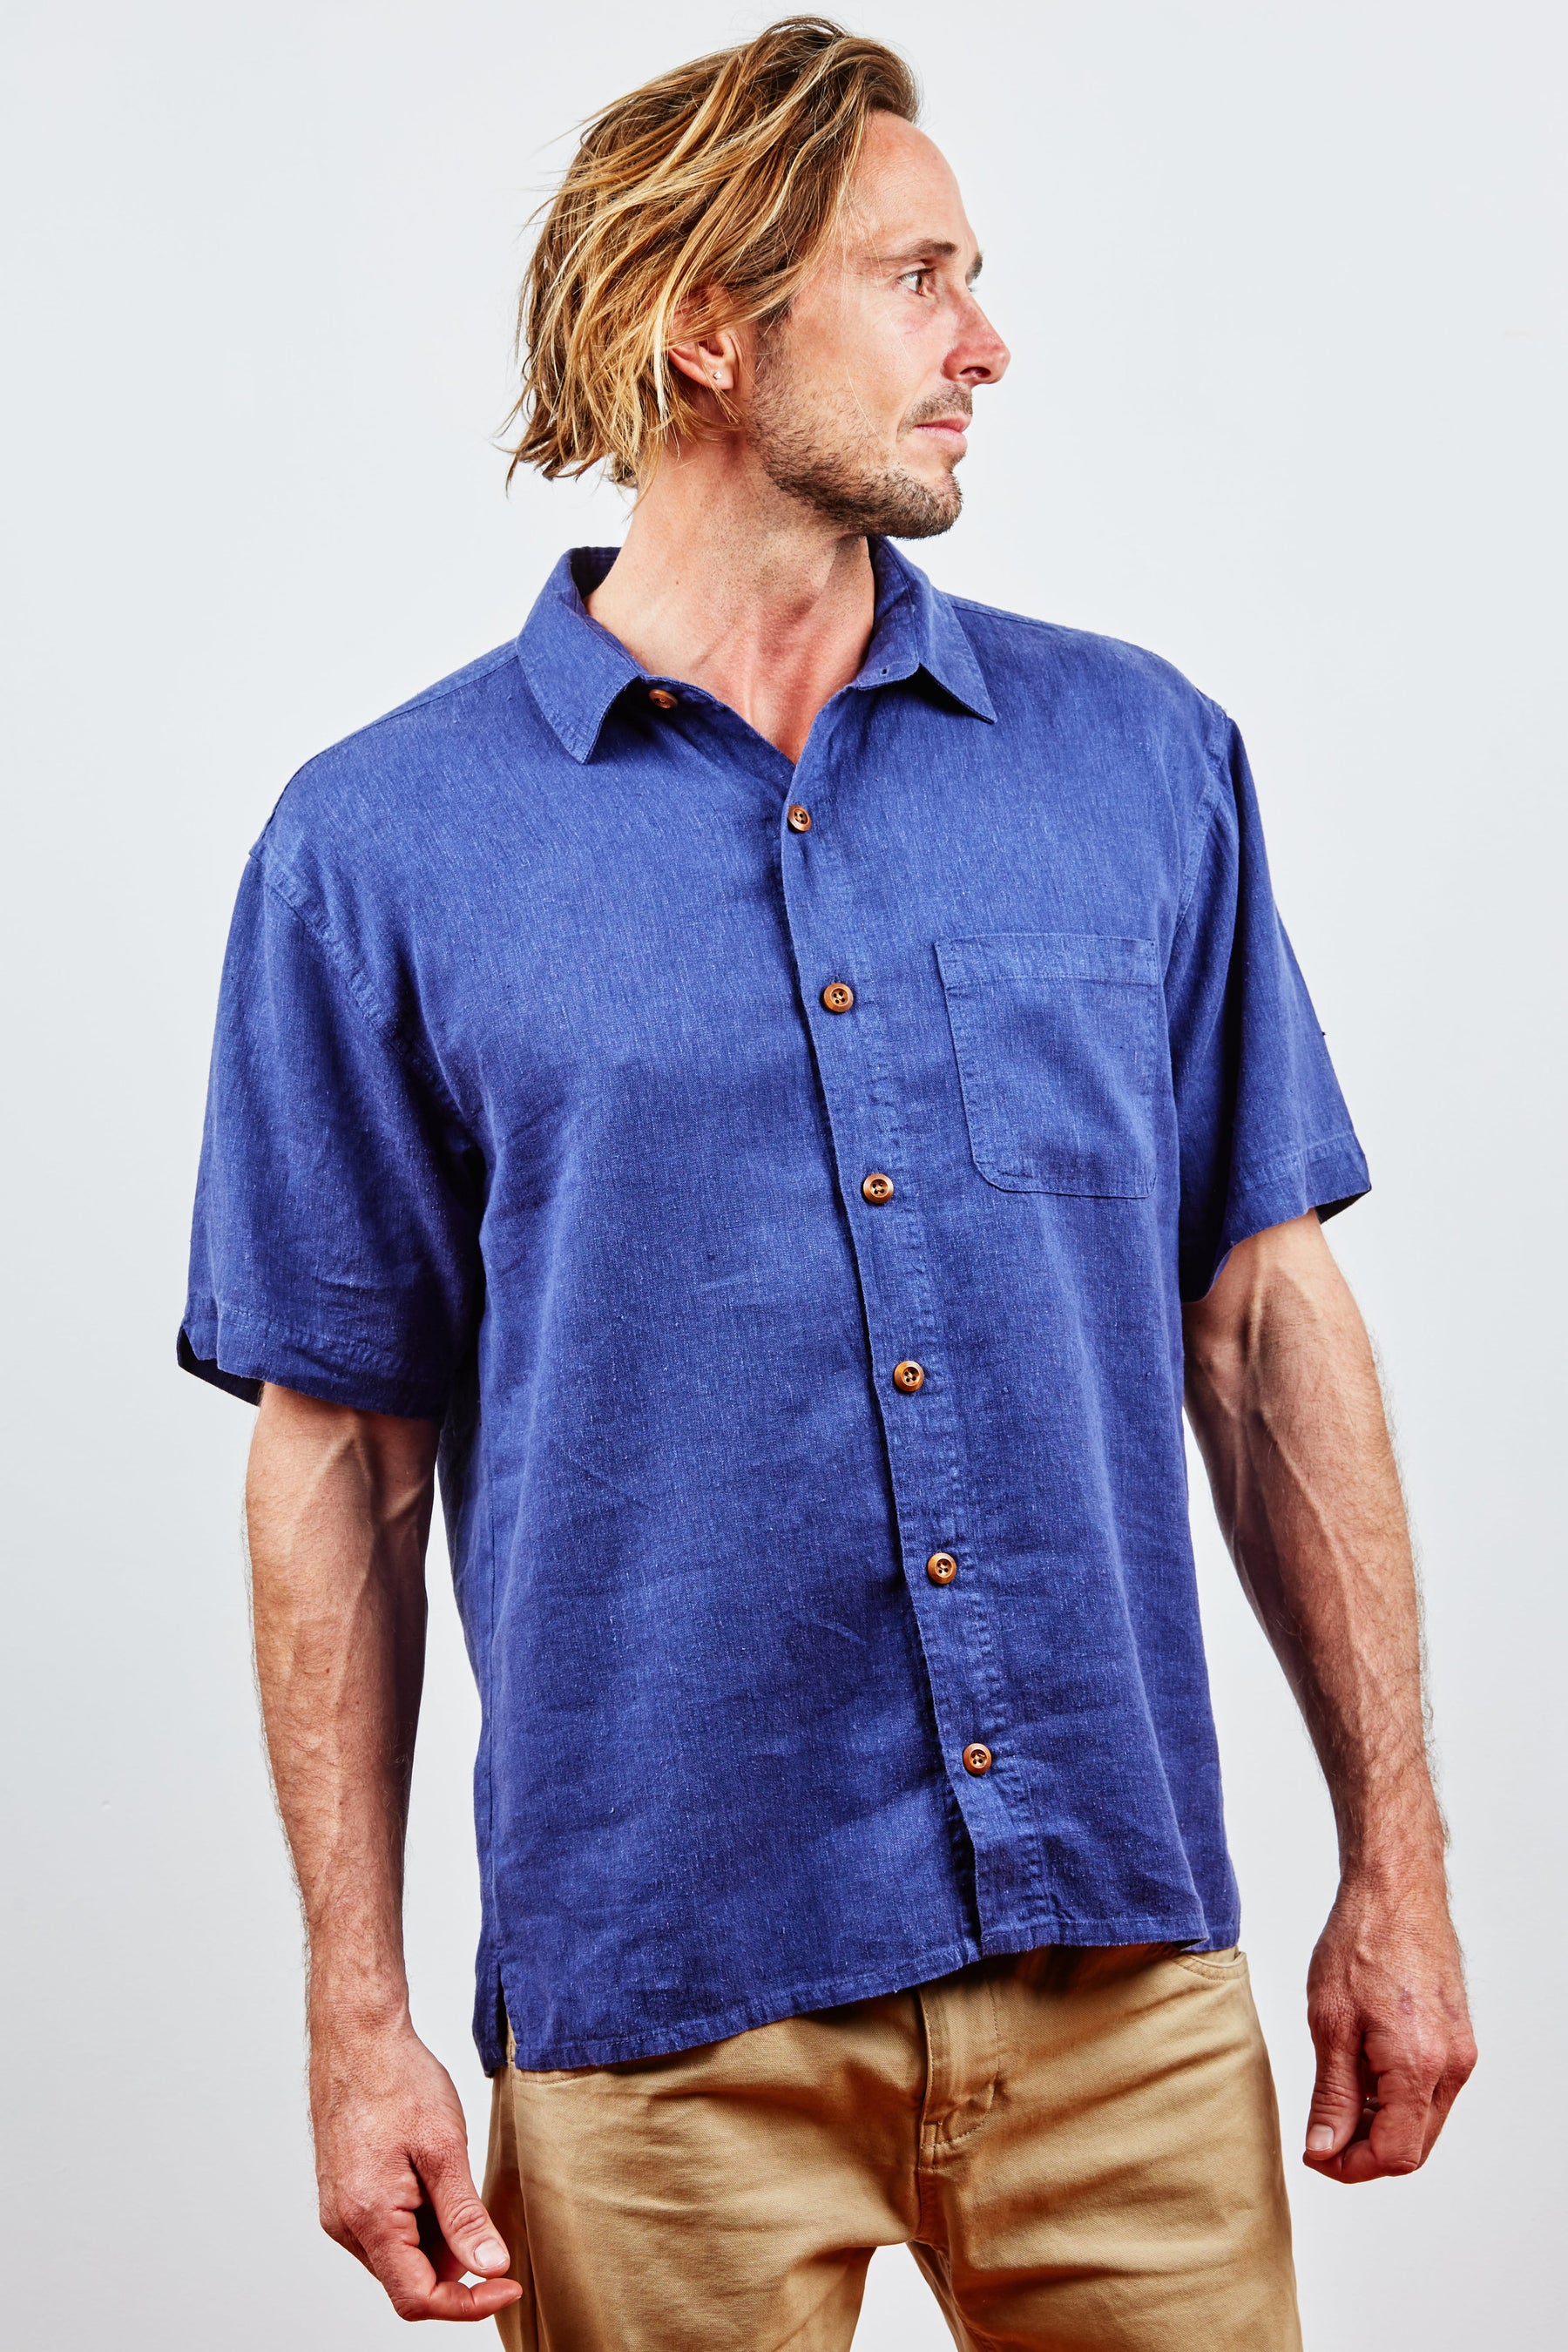 Buy Hemp Clothing Australia Mens Heritage Shirt - Natural Online